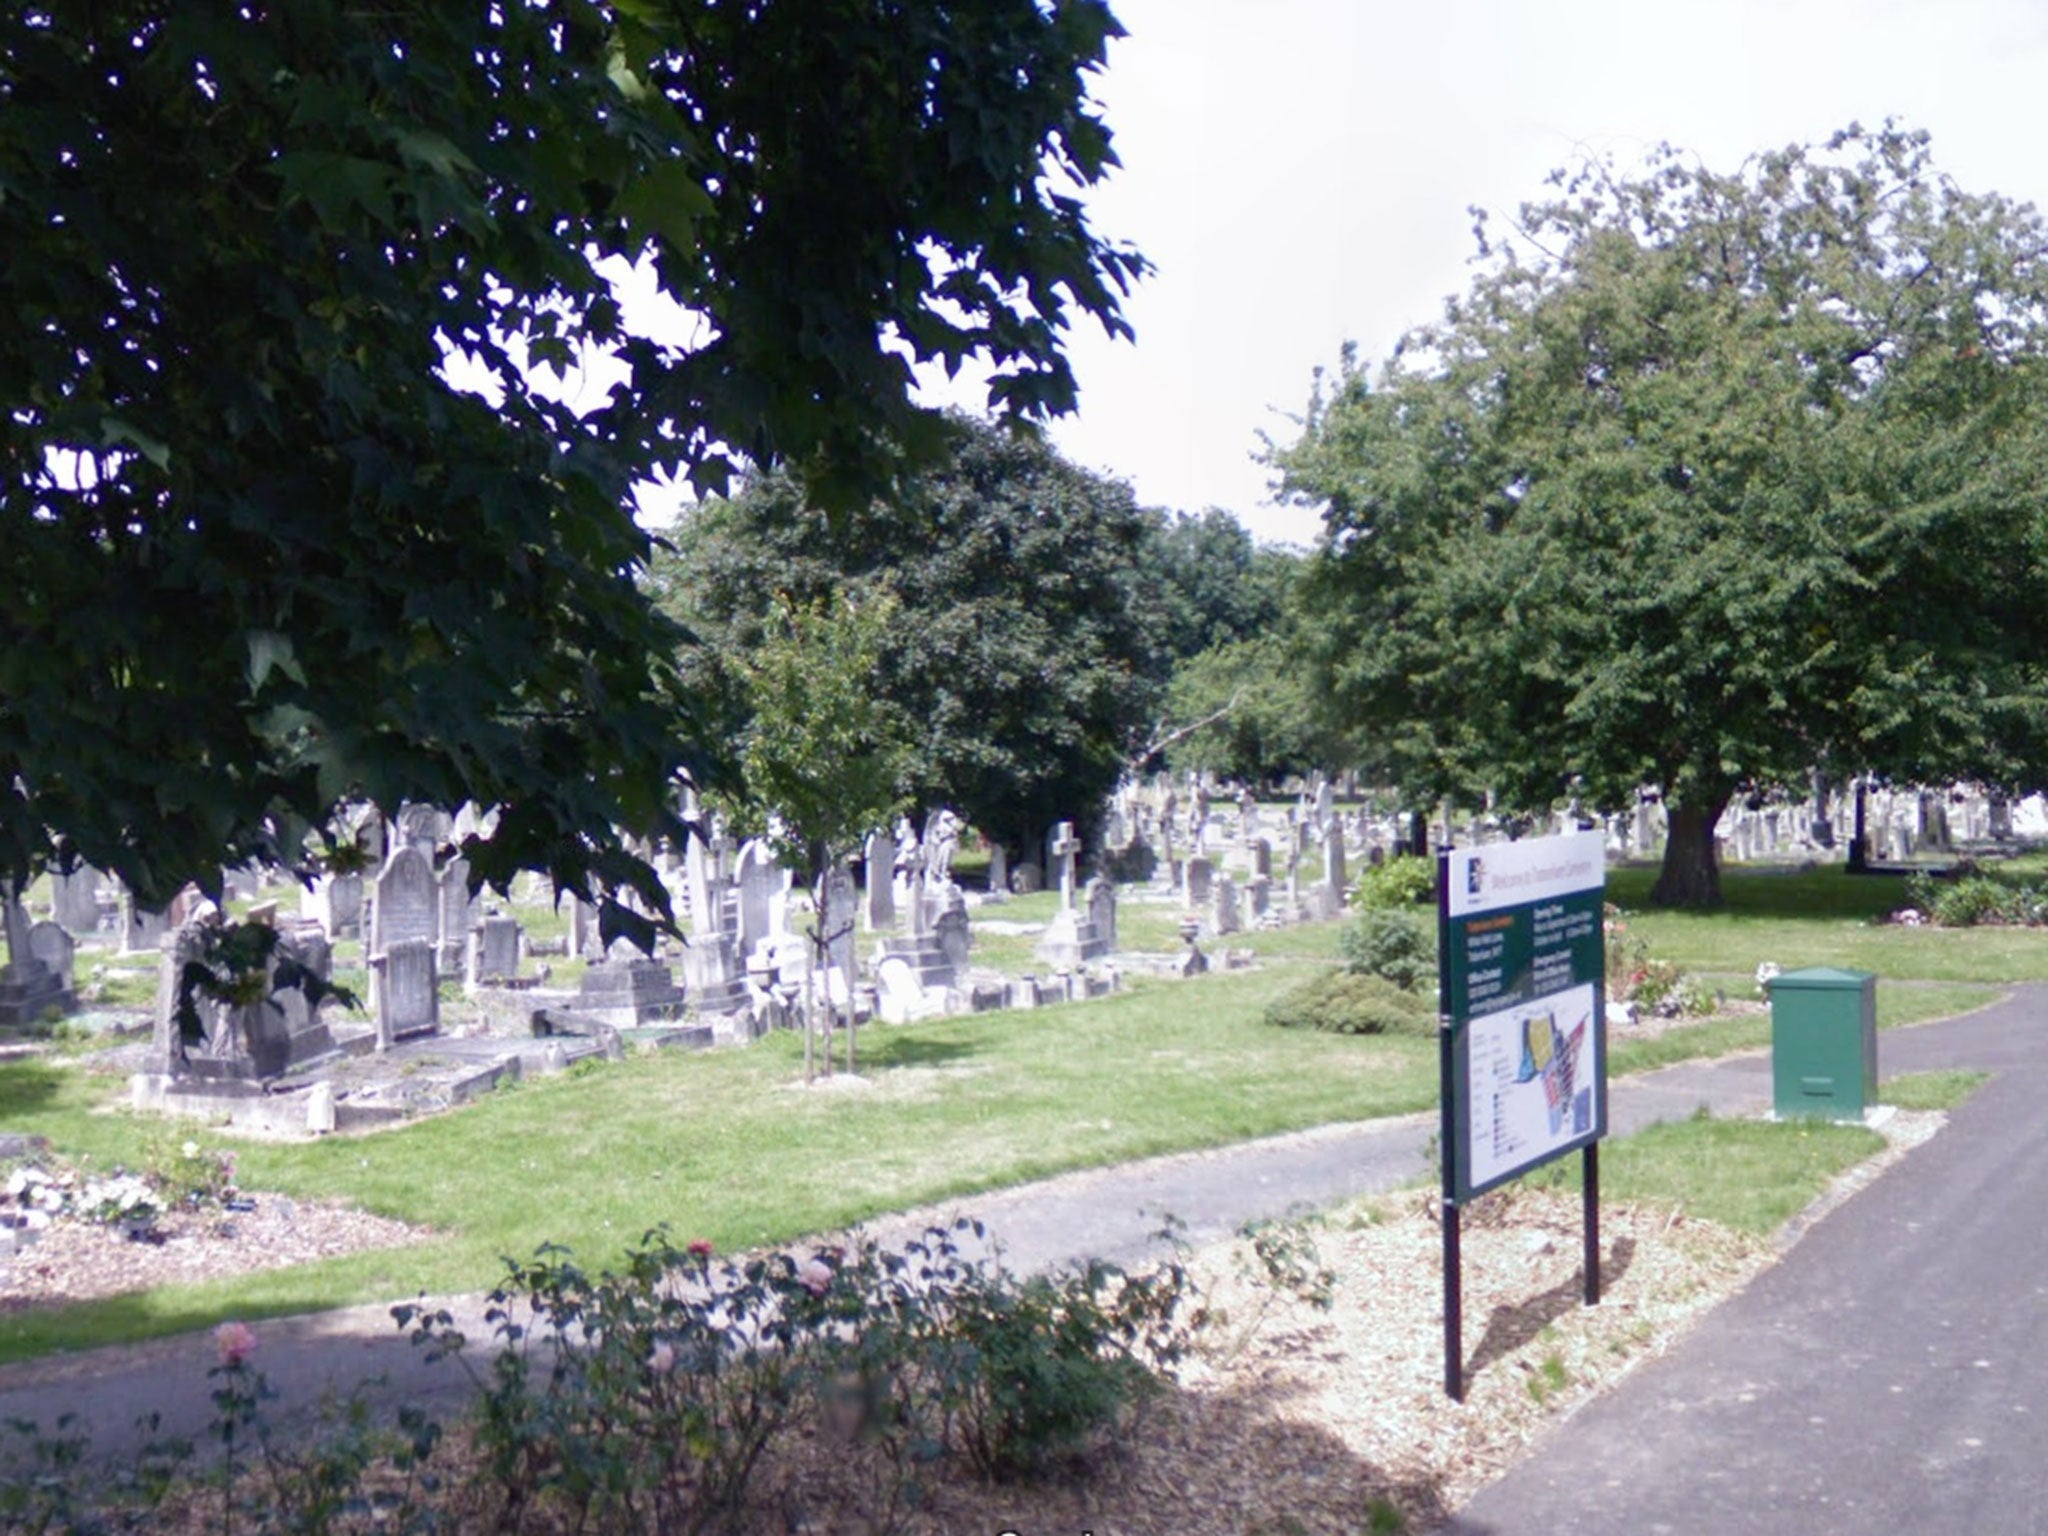 The man was shot in Tottenham Cemetery on 3 September